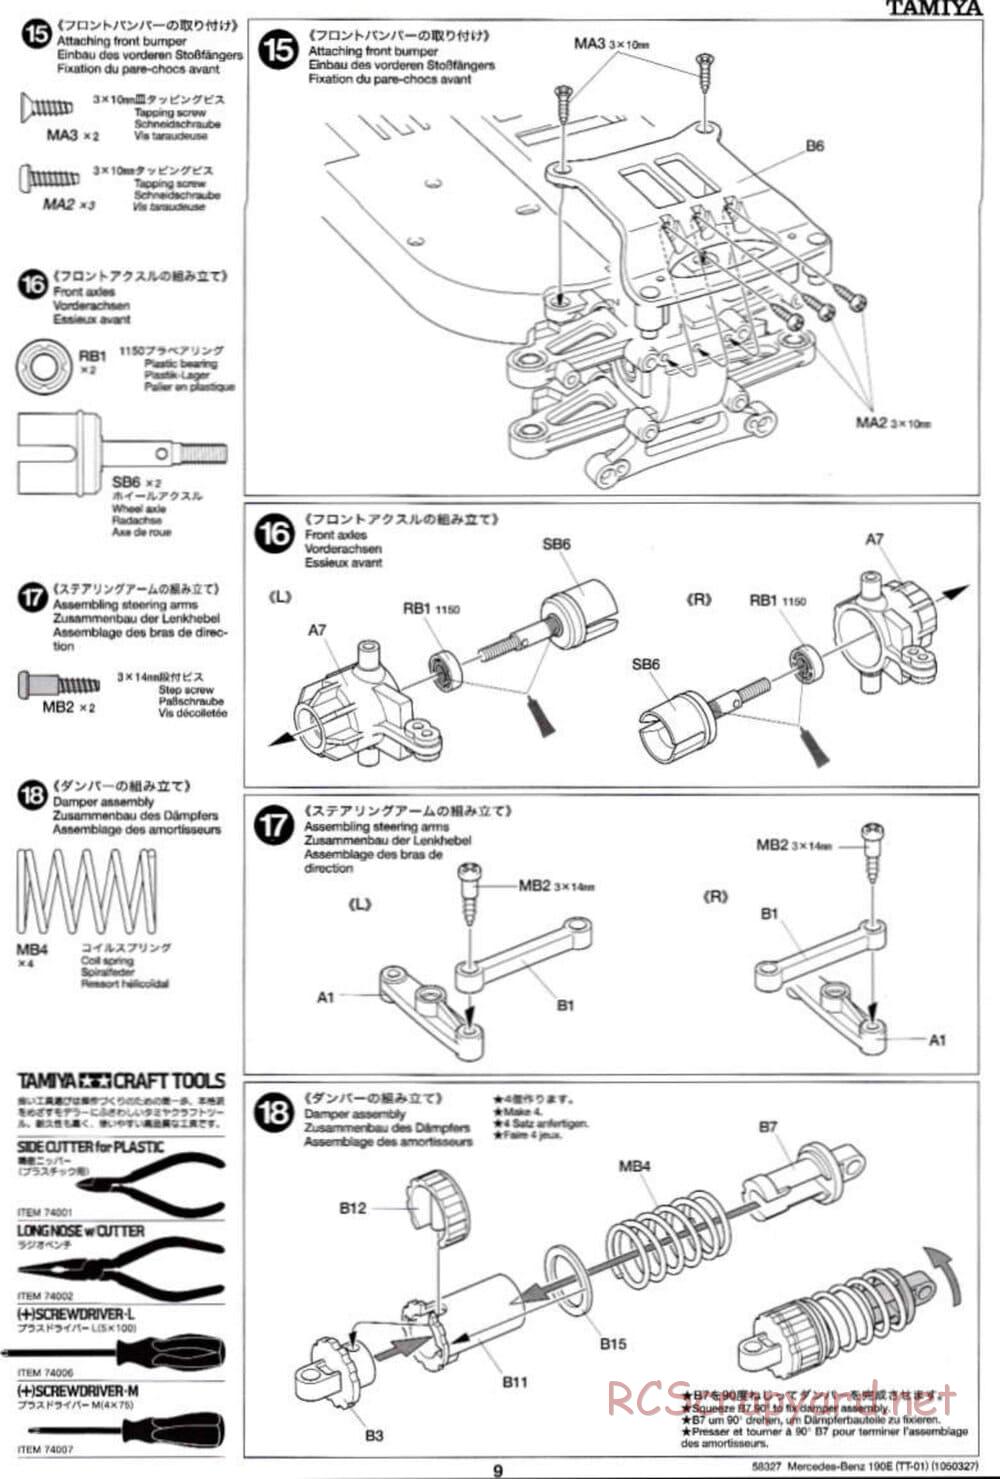 Tamiya - Mercedes Benz 190E Evo.II AMG - TT-01 Chassis - Manual - Page 9